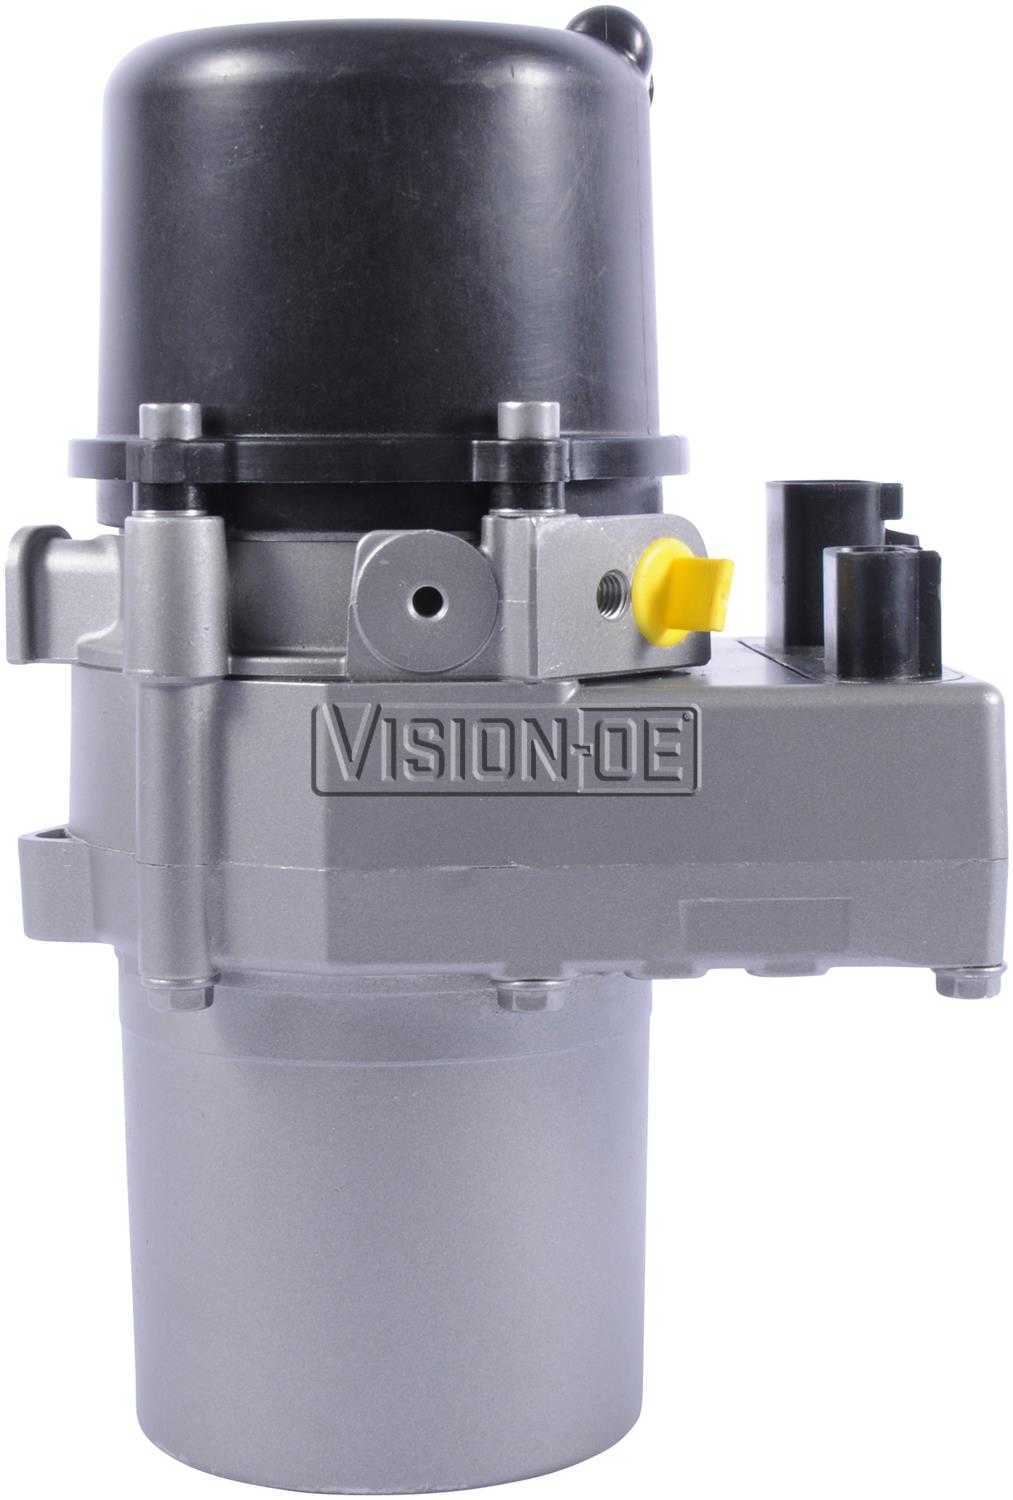 VISION-OE - Reman Power Steering Pump - VOE 980-0105E